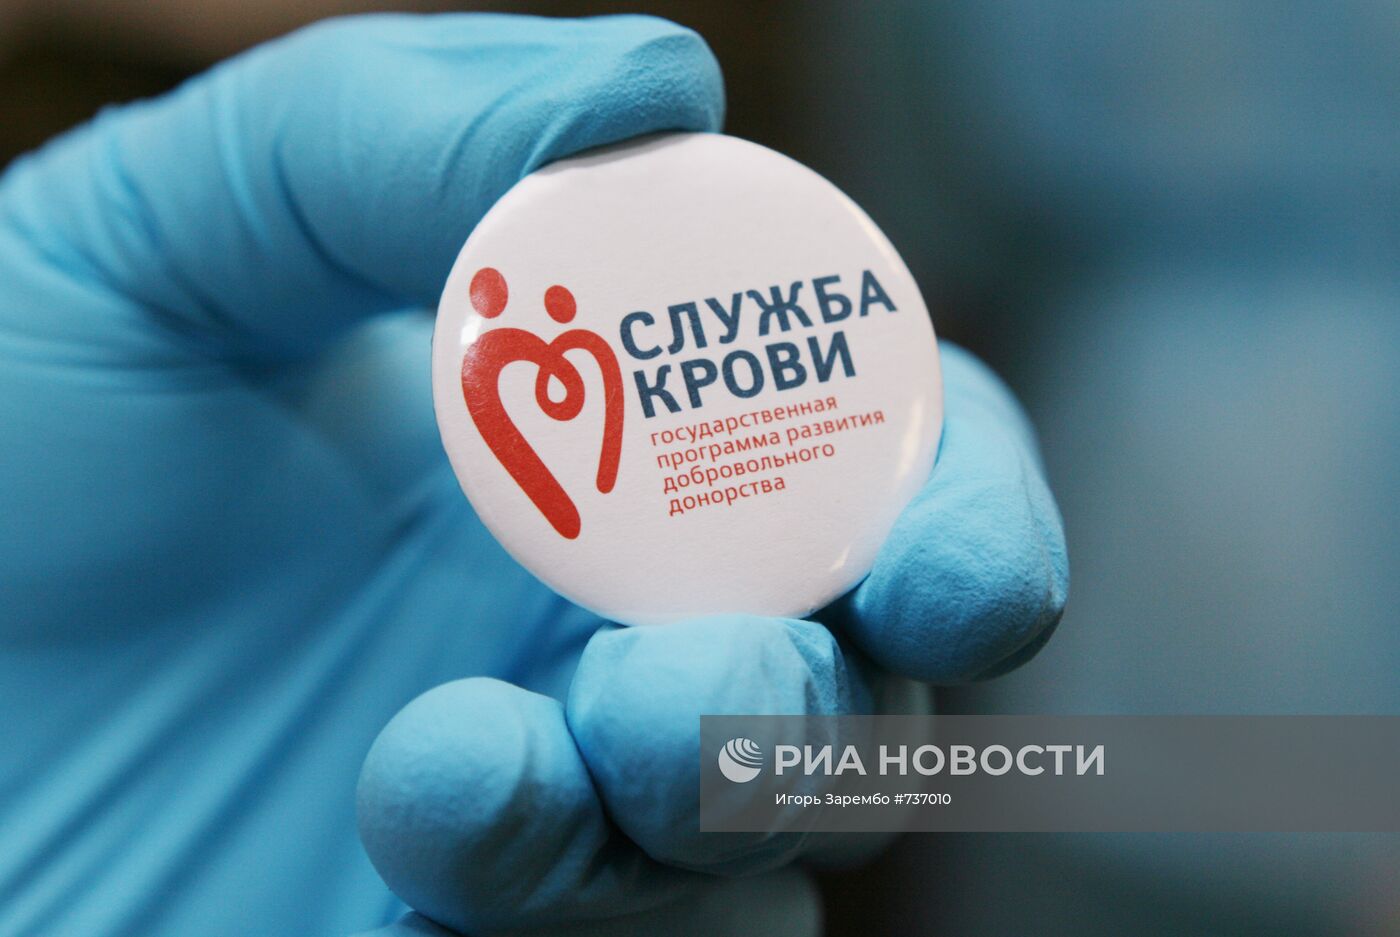 Значок с логотипом компании "Служба крови"